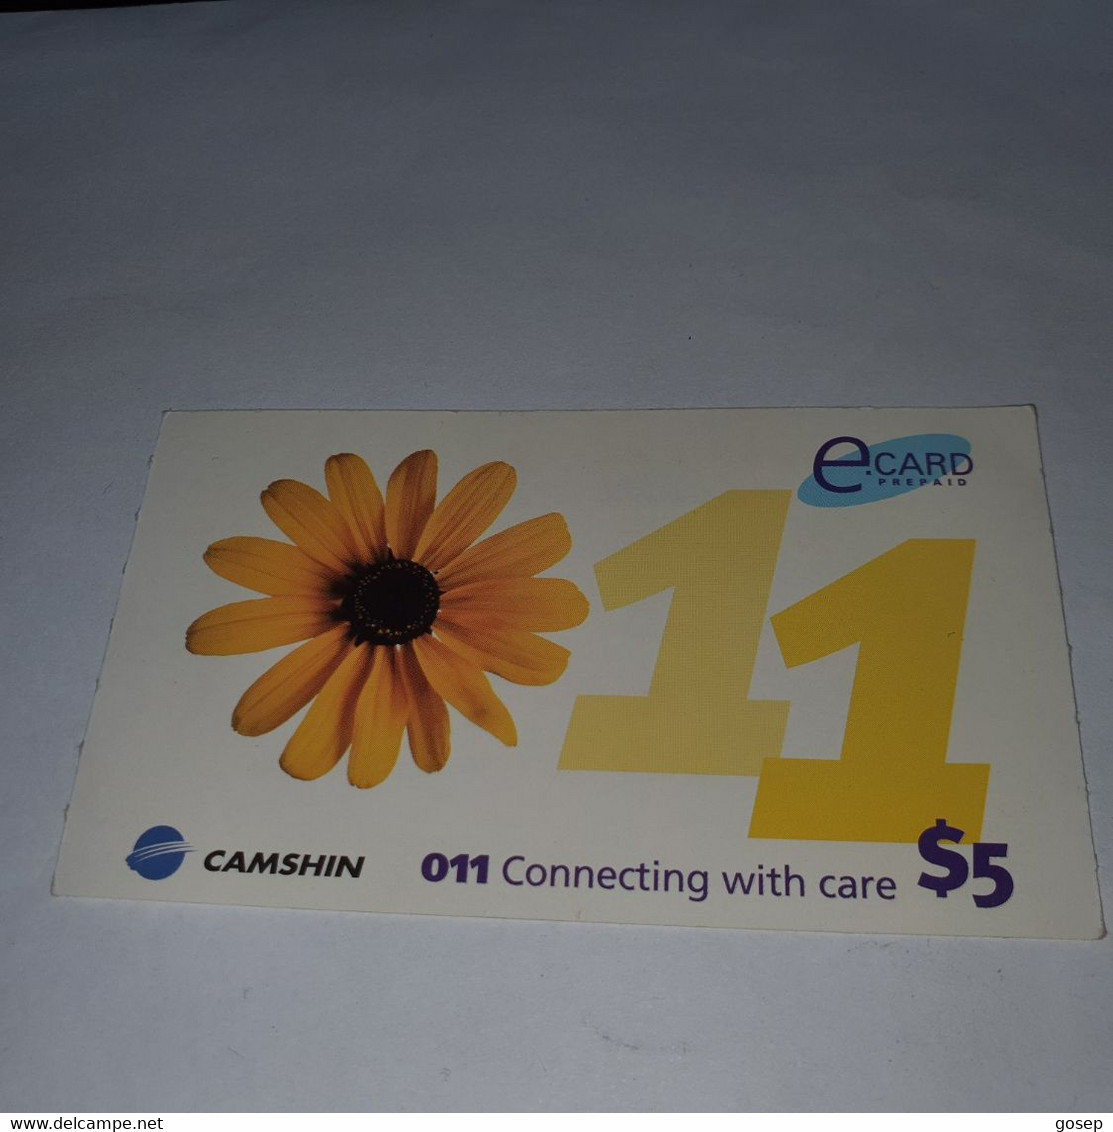 Cambodia-(CMB-SW-022)-sunflower-(e.card)-(50)-(0126-6339-57644)-(31/12/2007)-($5)-used Card+1card Prepiad - Kambodscha